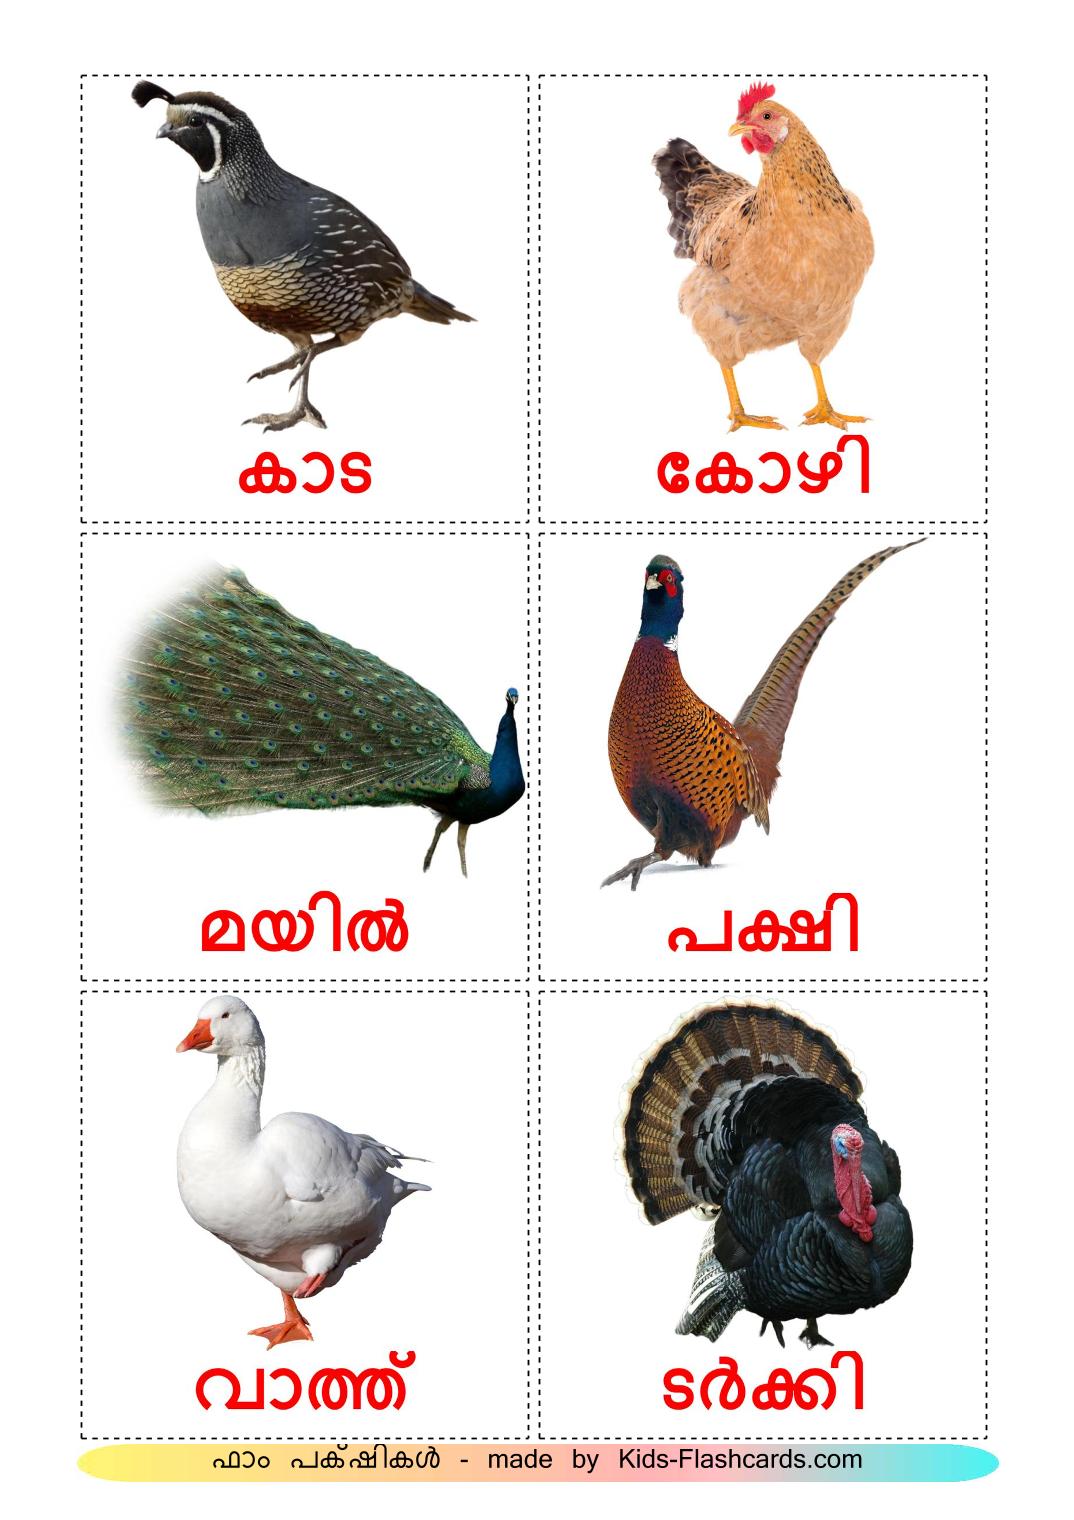 Aves de granja - 11 fichas de malayalam para imprimir gratis 